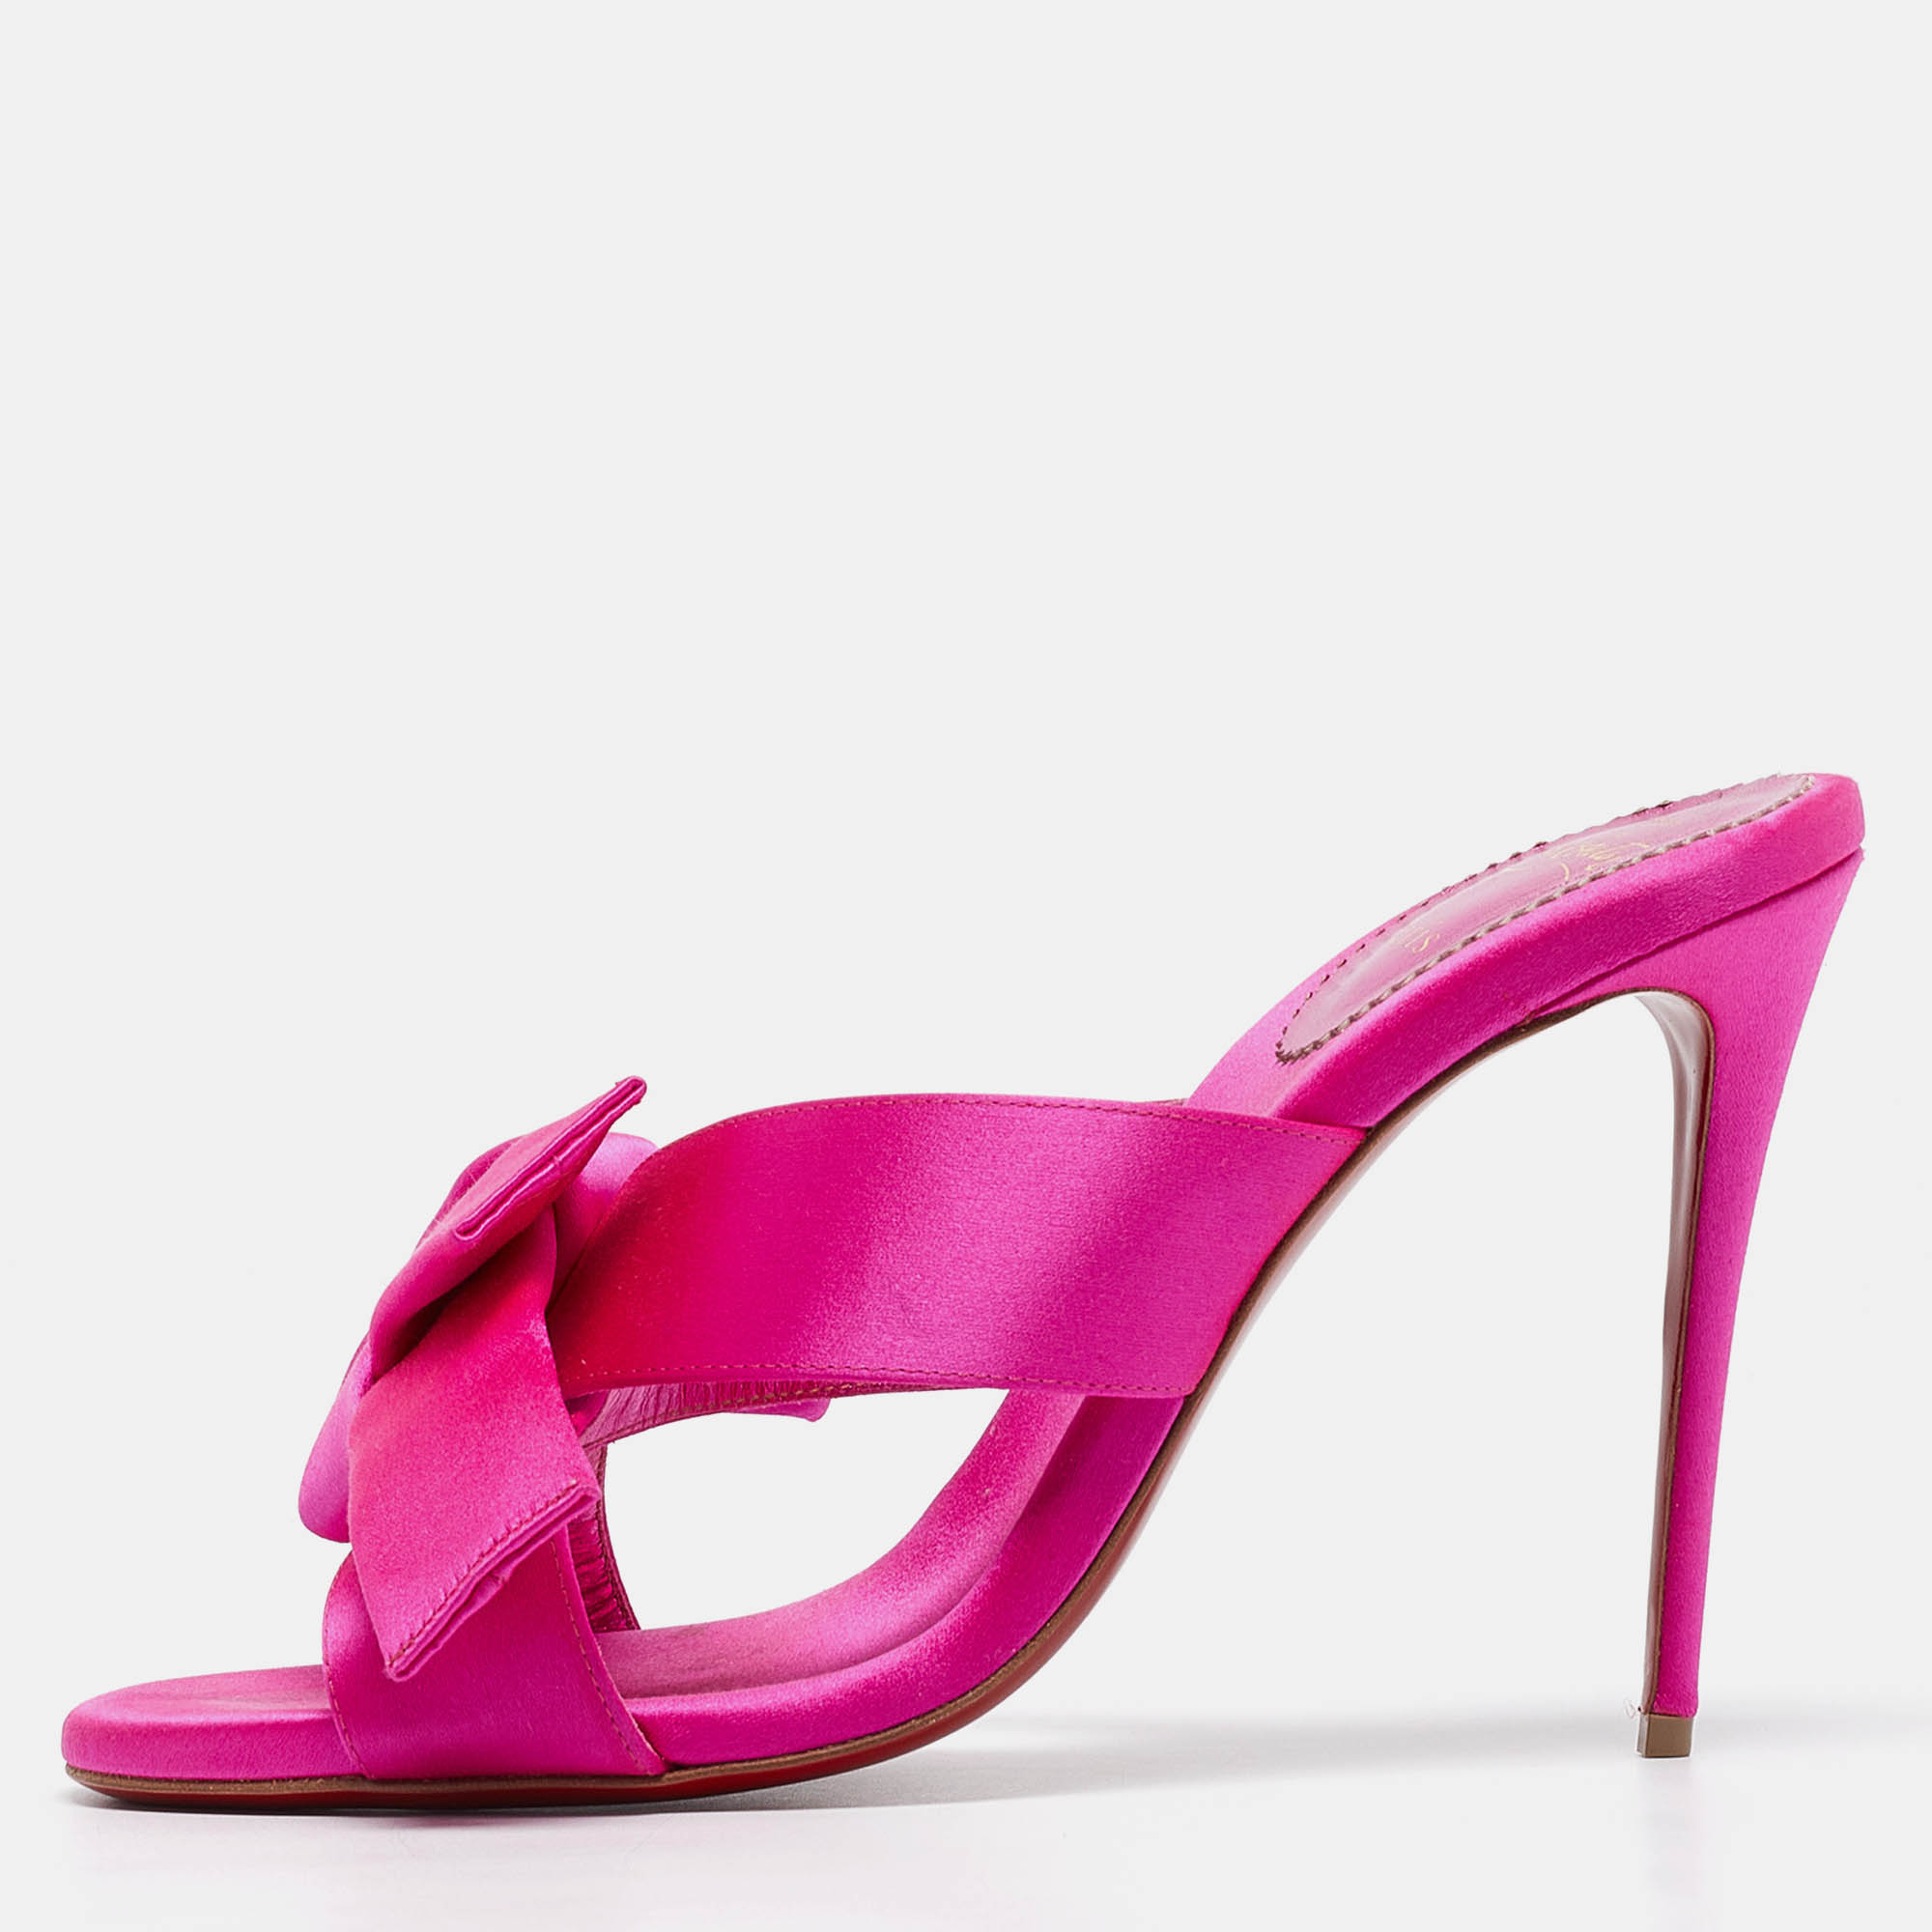 Christian louboutin pink satin matricia sandals size 40